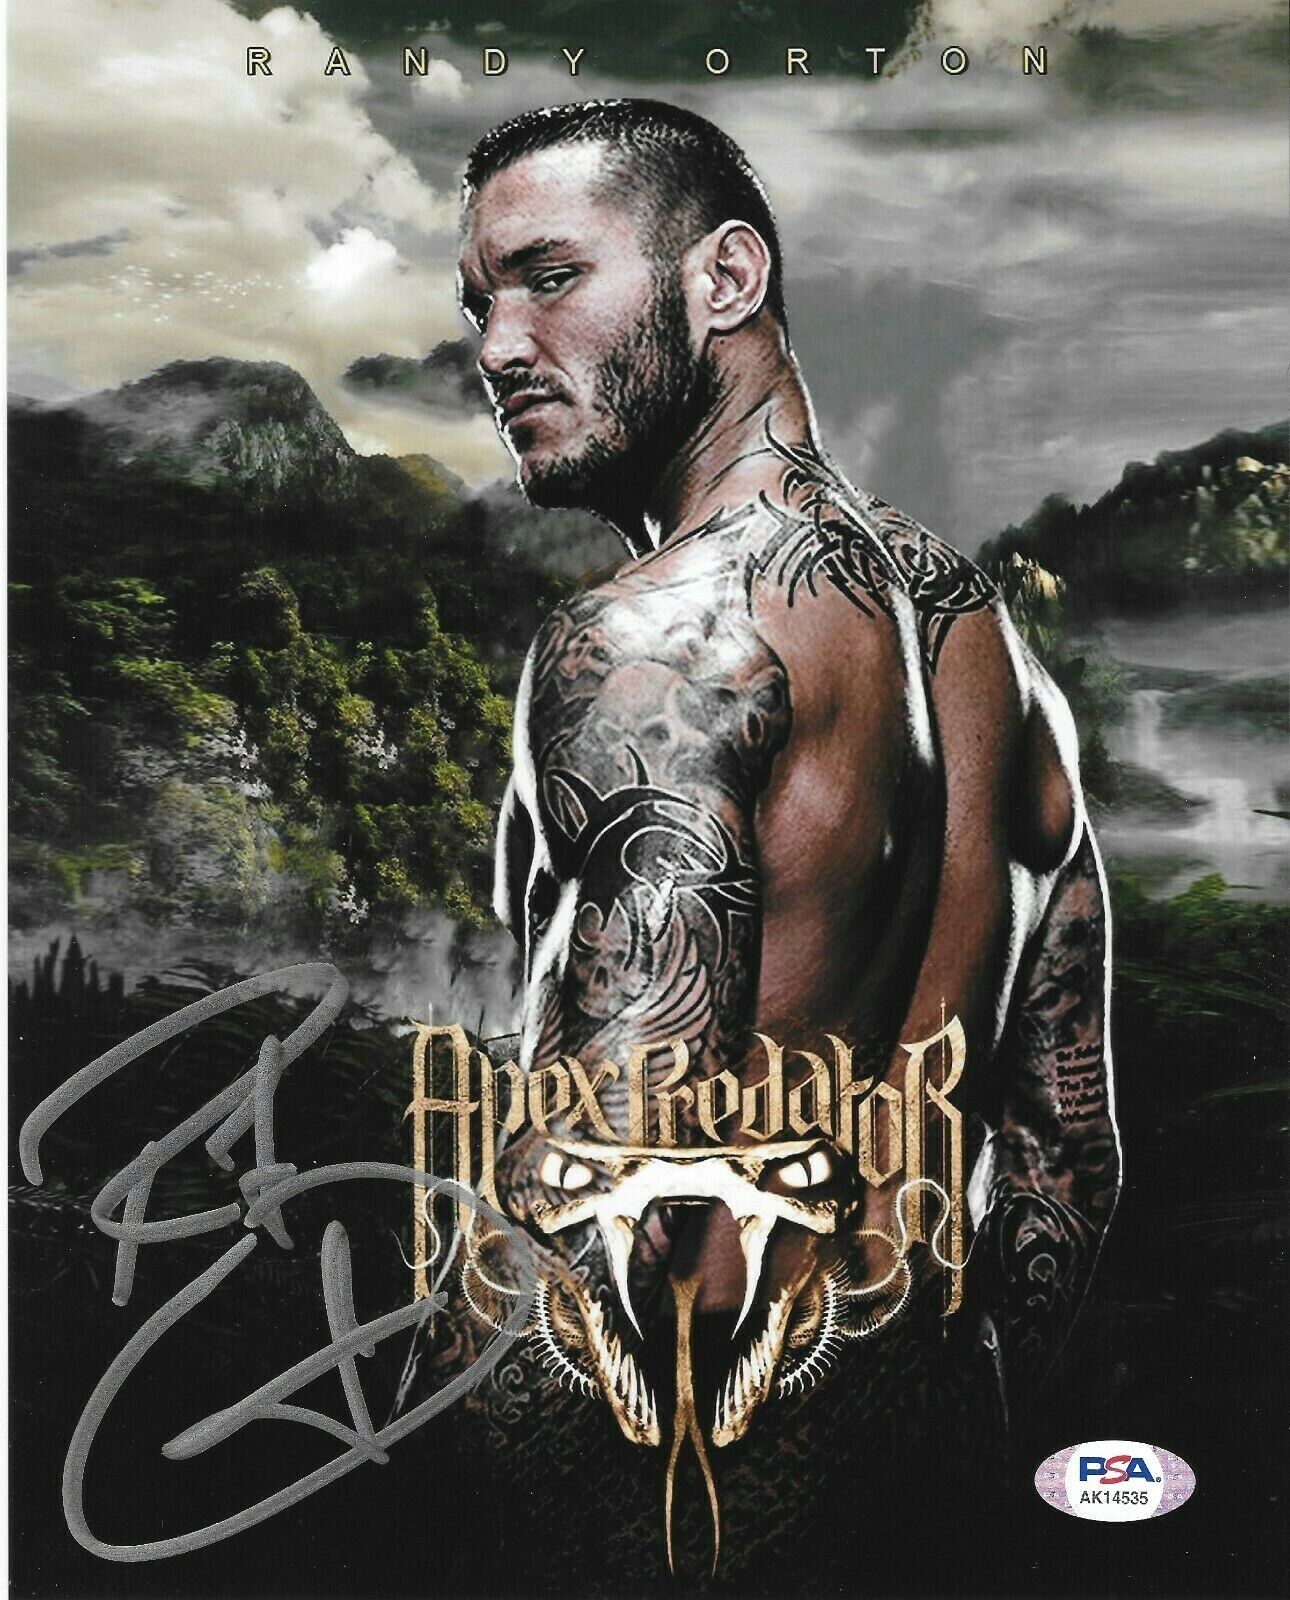 Randy Orton WWE Signed Autograph 8x10 Photo Poster painting #6 w/ PSA COA